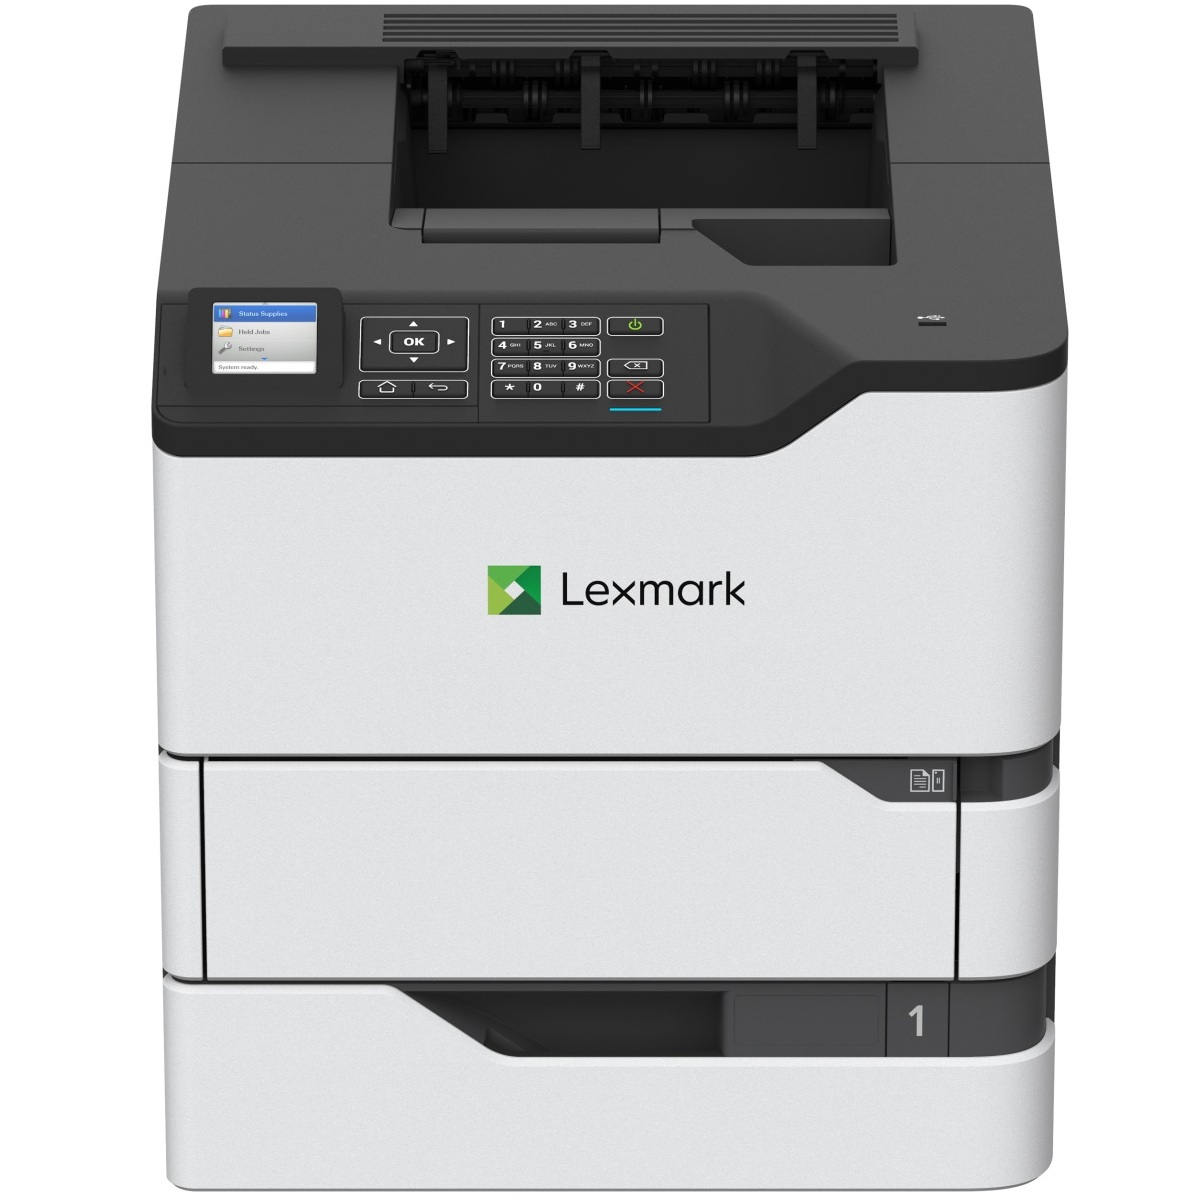 Lexmark MS821dn - Printer - B/W - Duplex - laser - A4/Legal - 1200 x 1200 dpi - up to 55 ppm - capacity: 650 sheets - USB 2.0, Gigabit LAN, USB 2.0 host